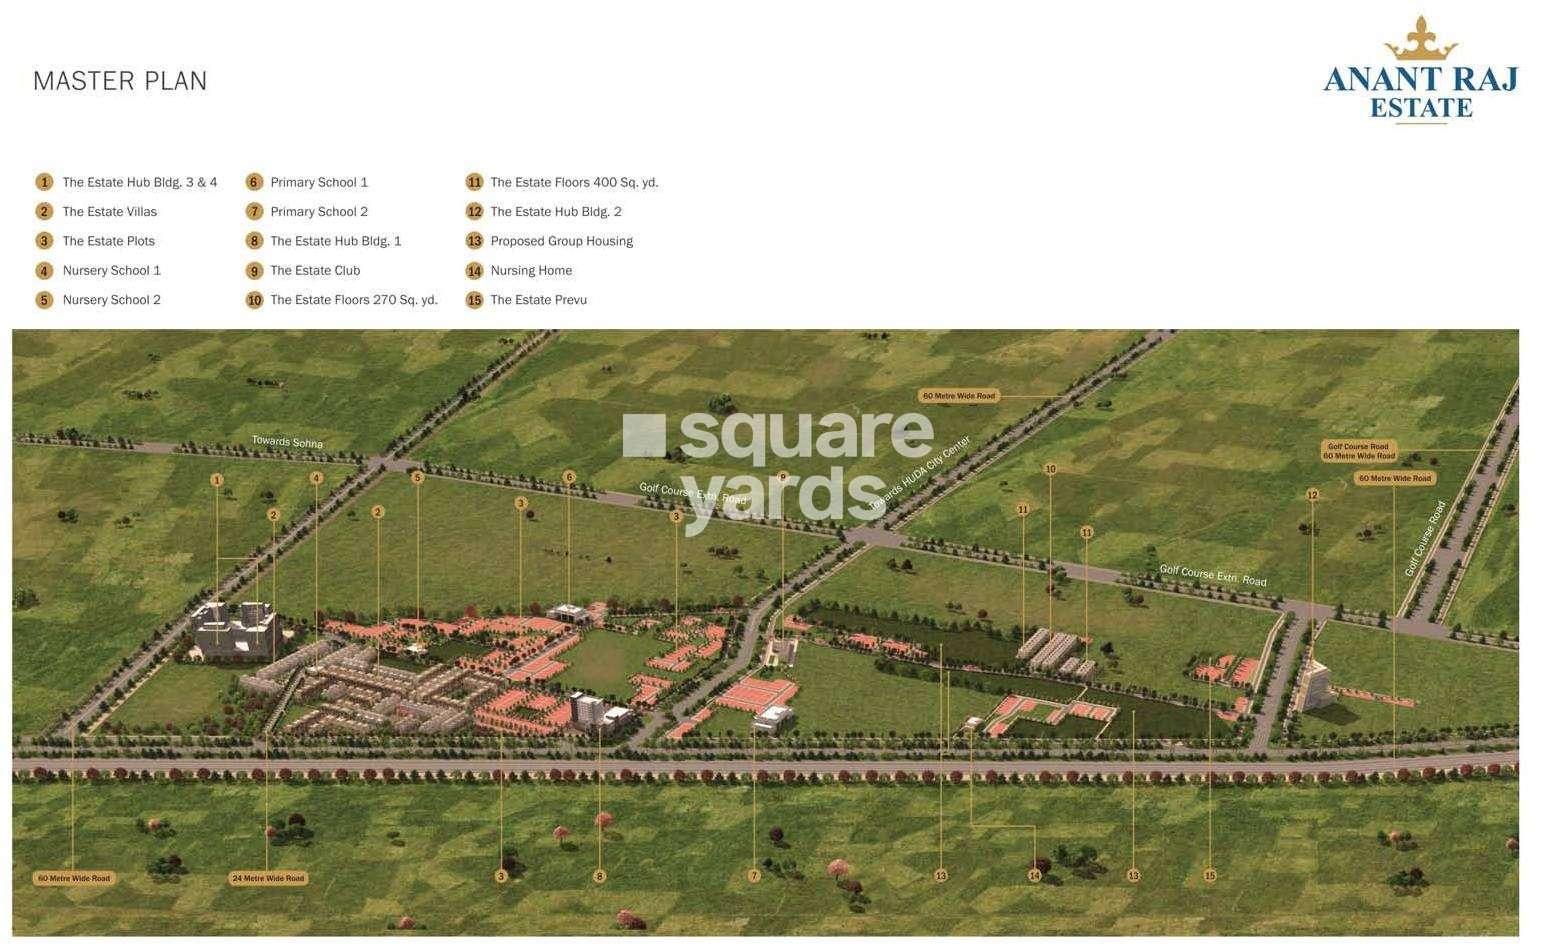 anant raj estate plots project master plan image1